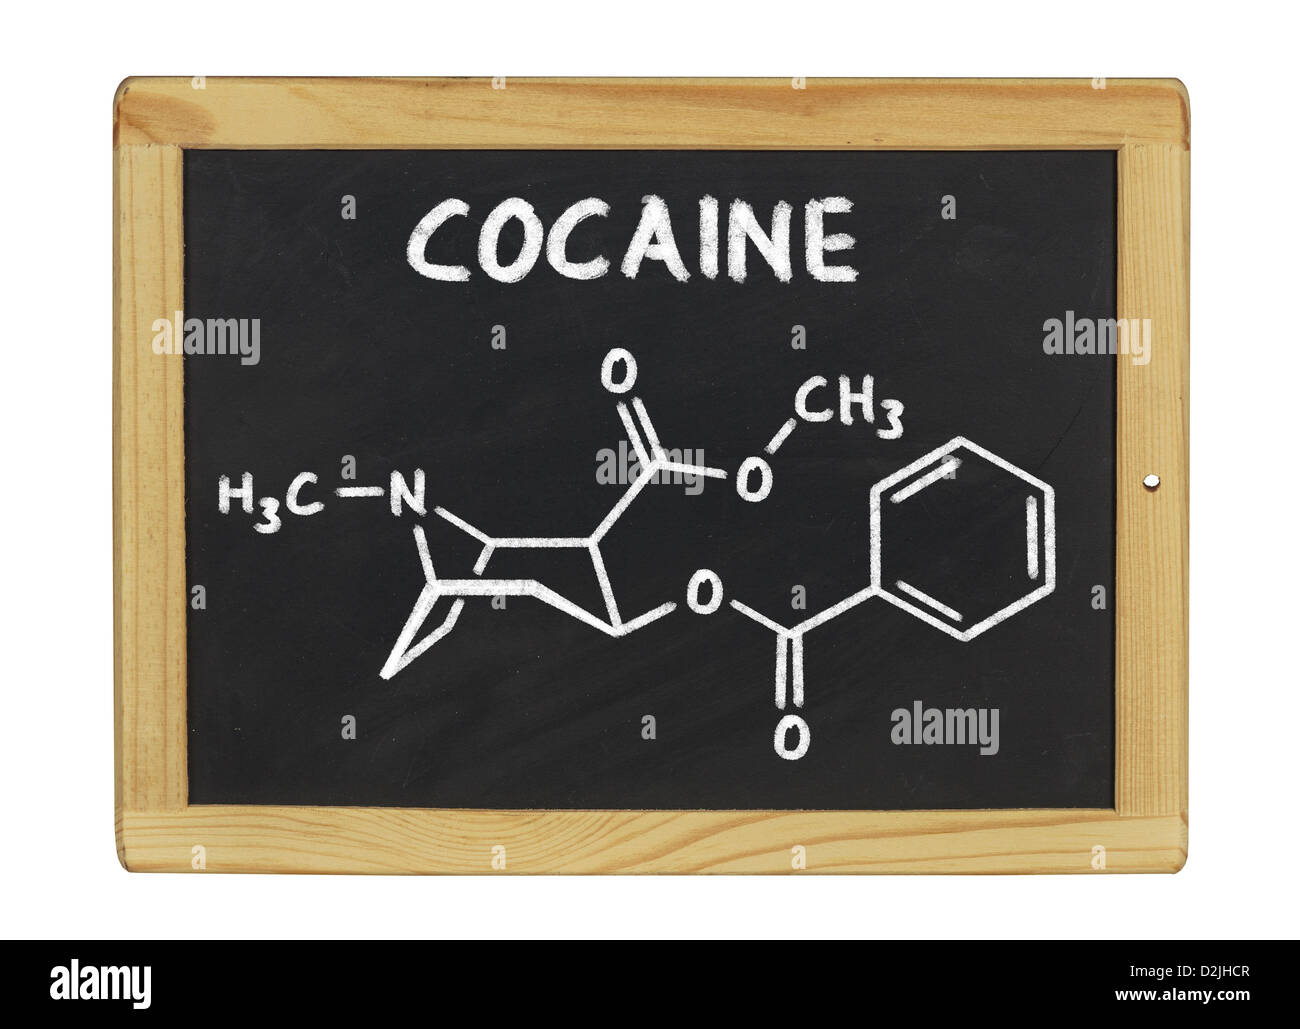 chemical formula of cocaine on a blackboard Stock Photo